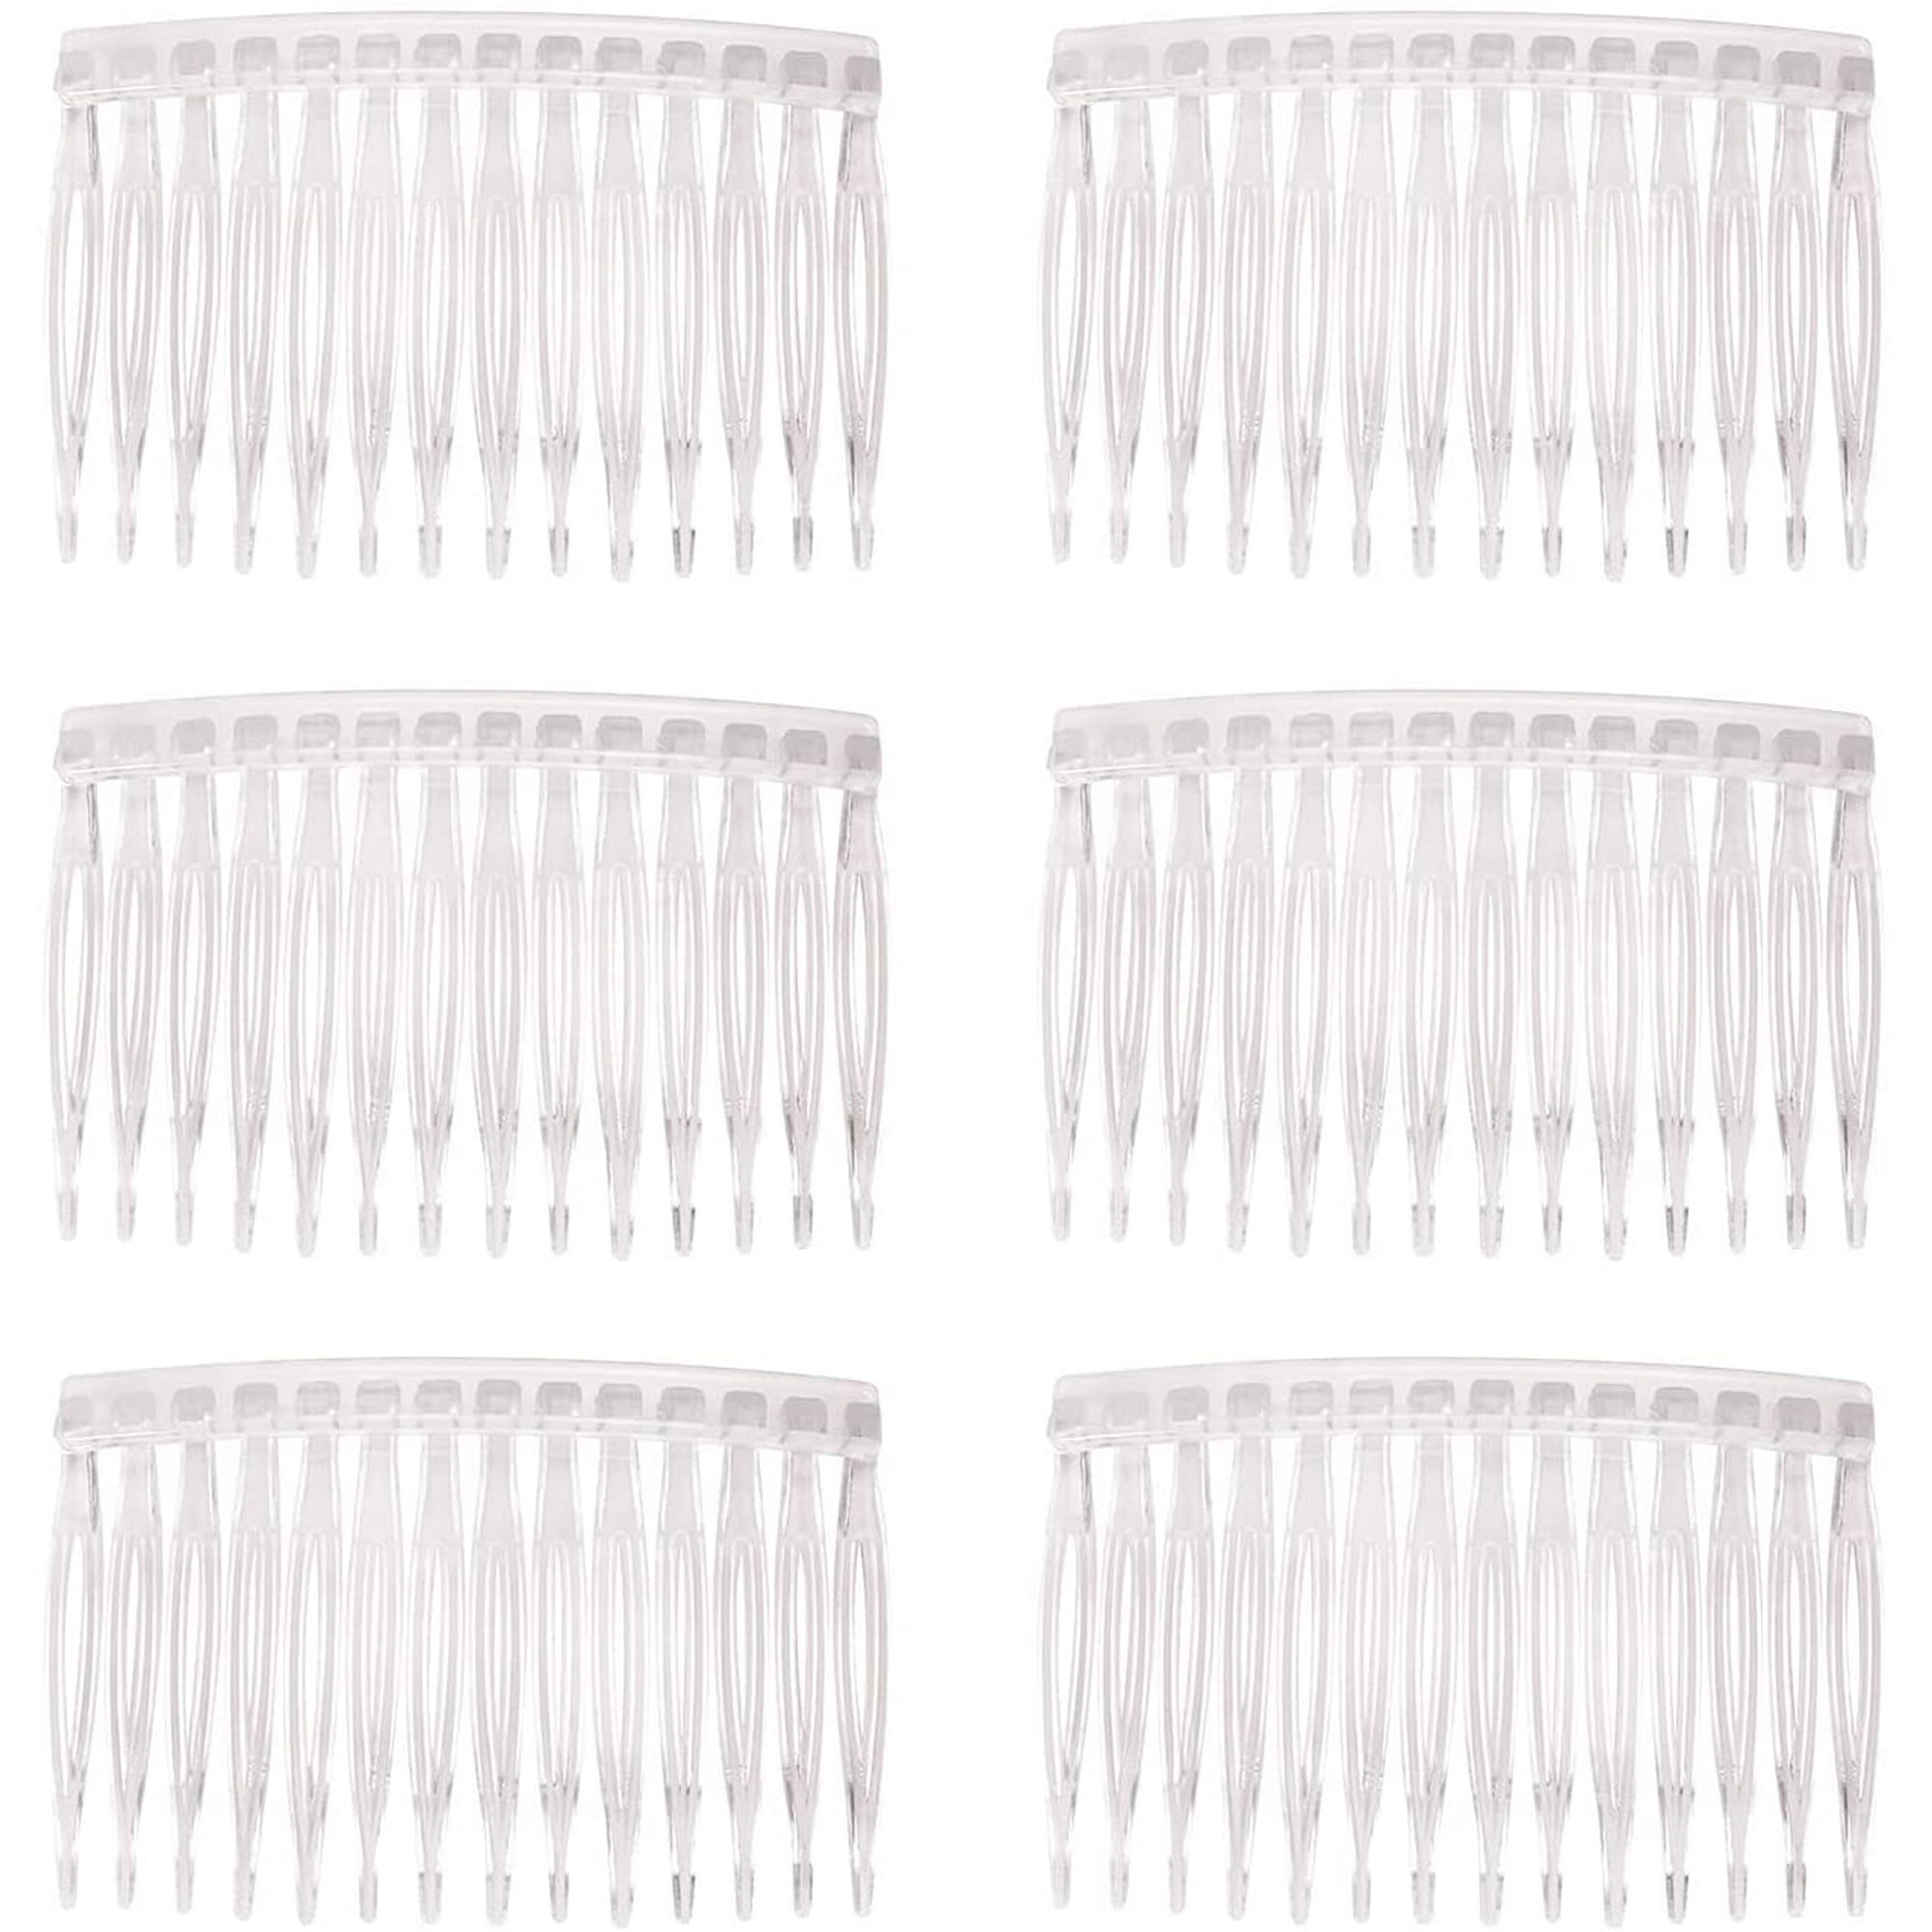 6 Pcs Metal Hair Combs Clips Comb Slides 30 Teeth DIY Women Hair Accessories 